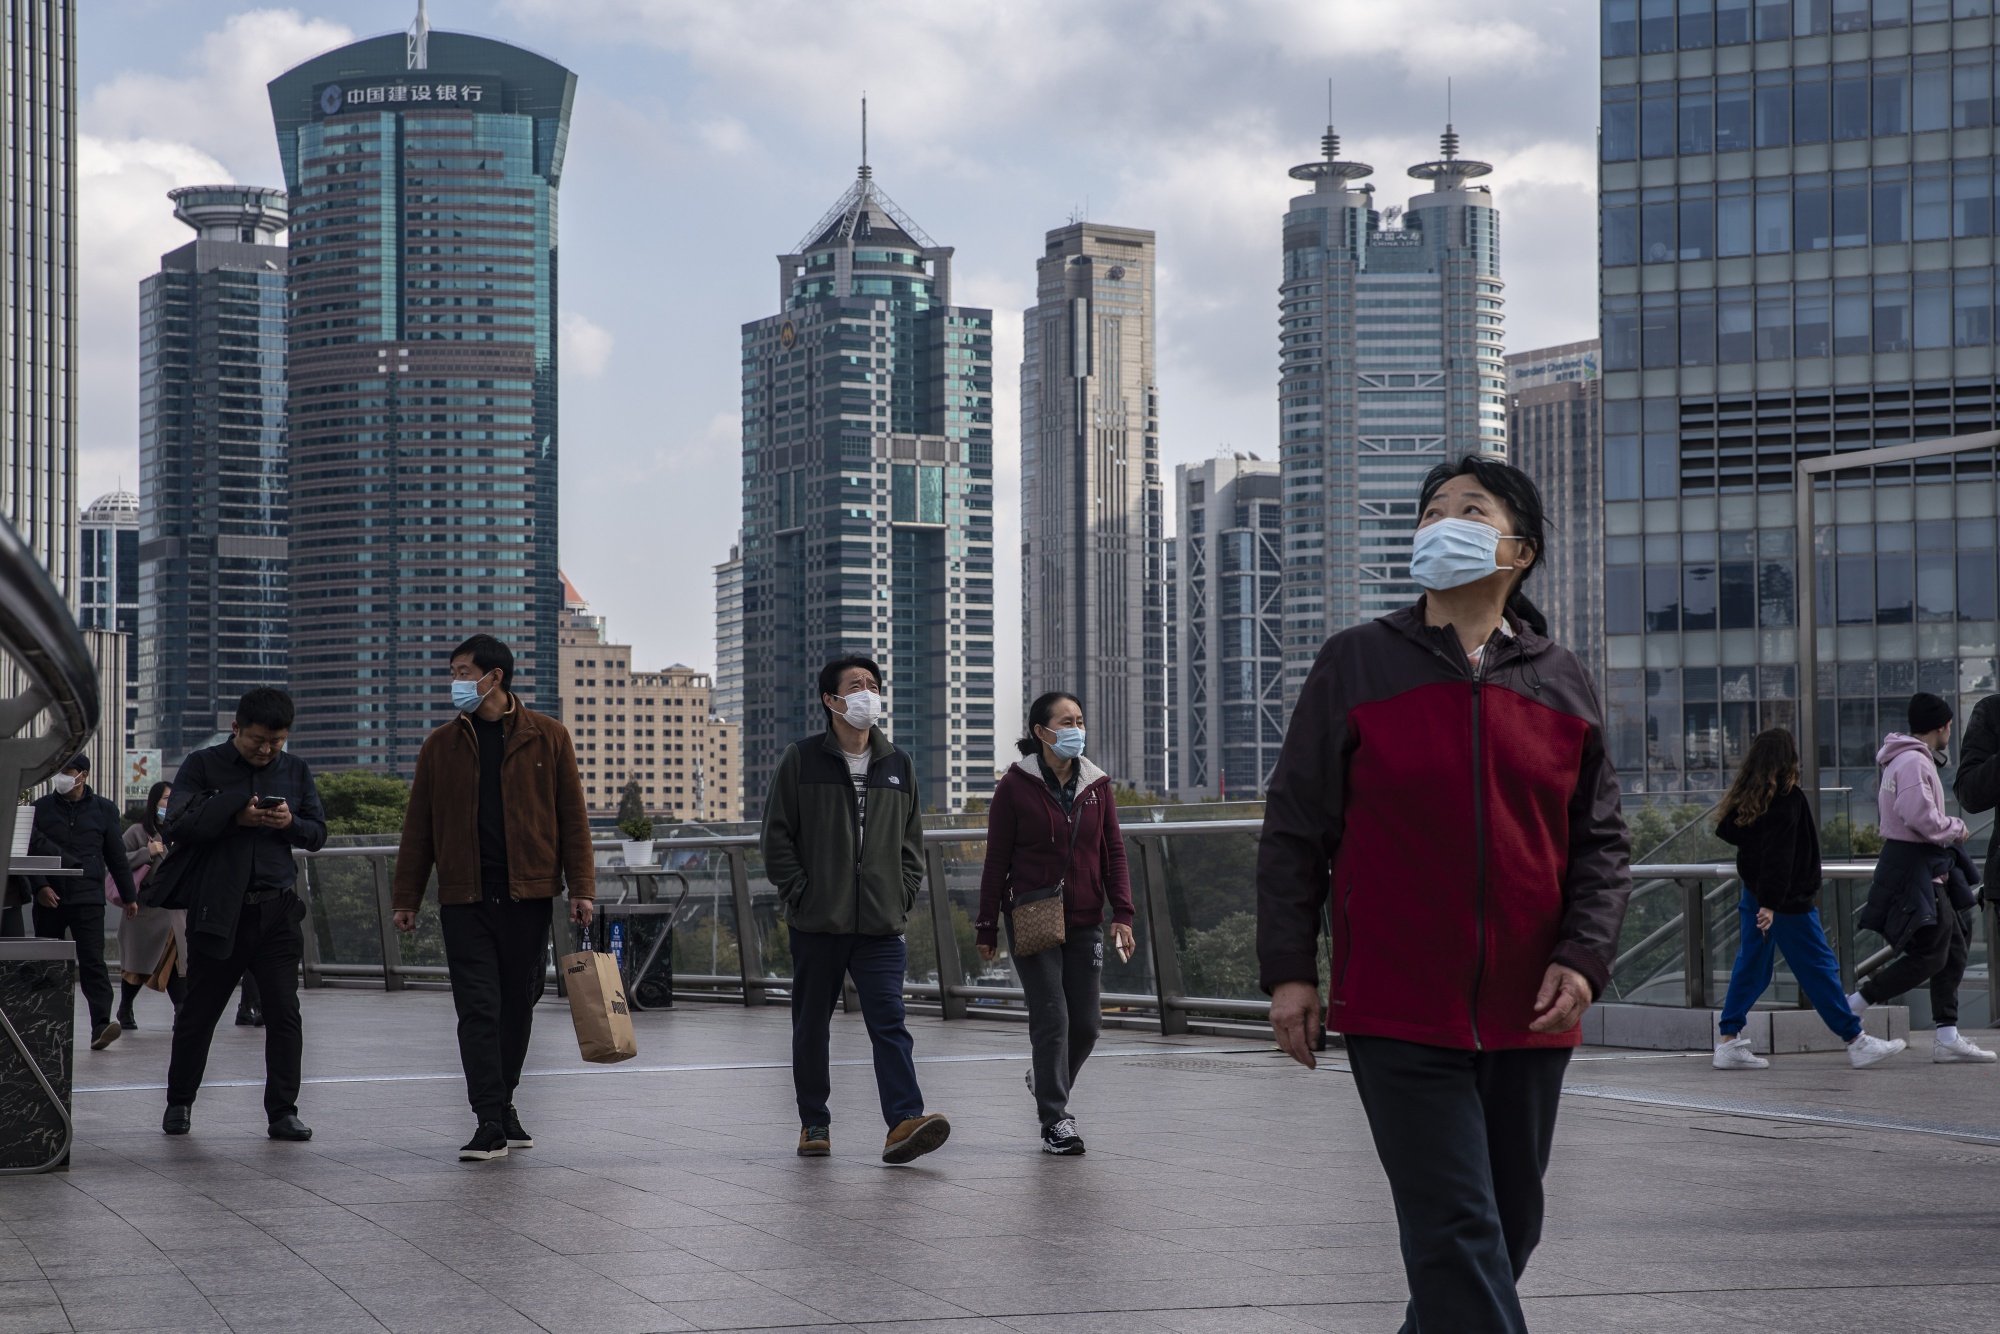 Pedestrians wearing protective masks walk through the Lujiazui financial district in Shanghai.